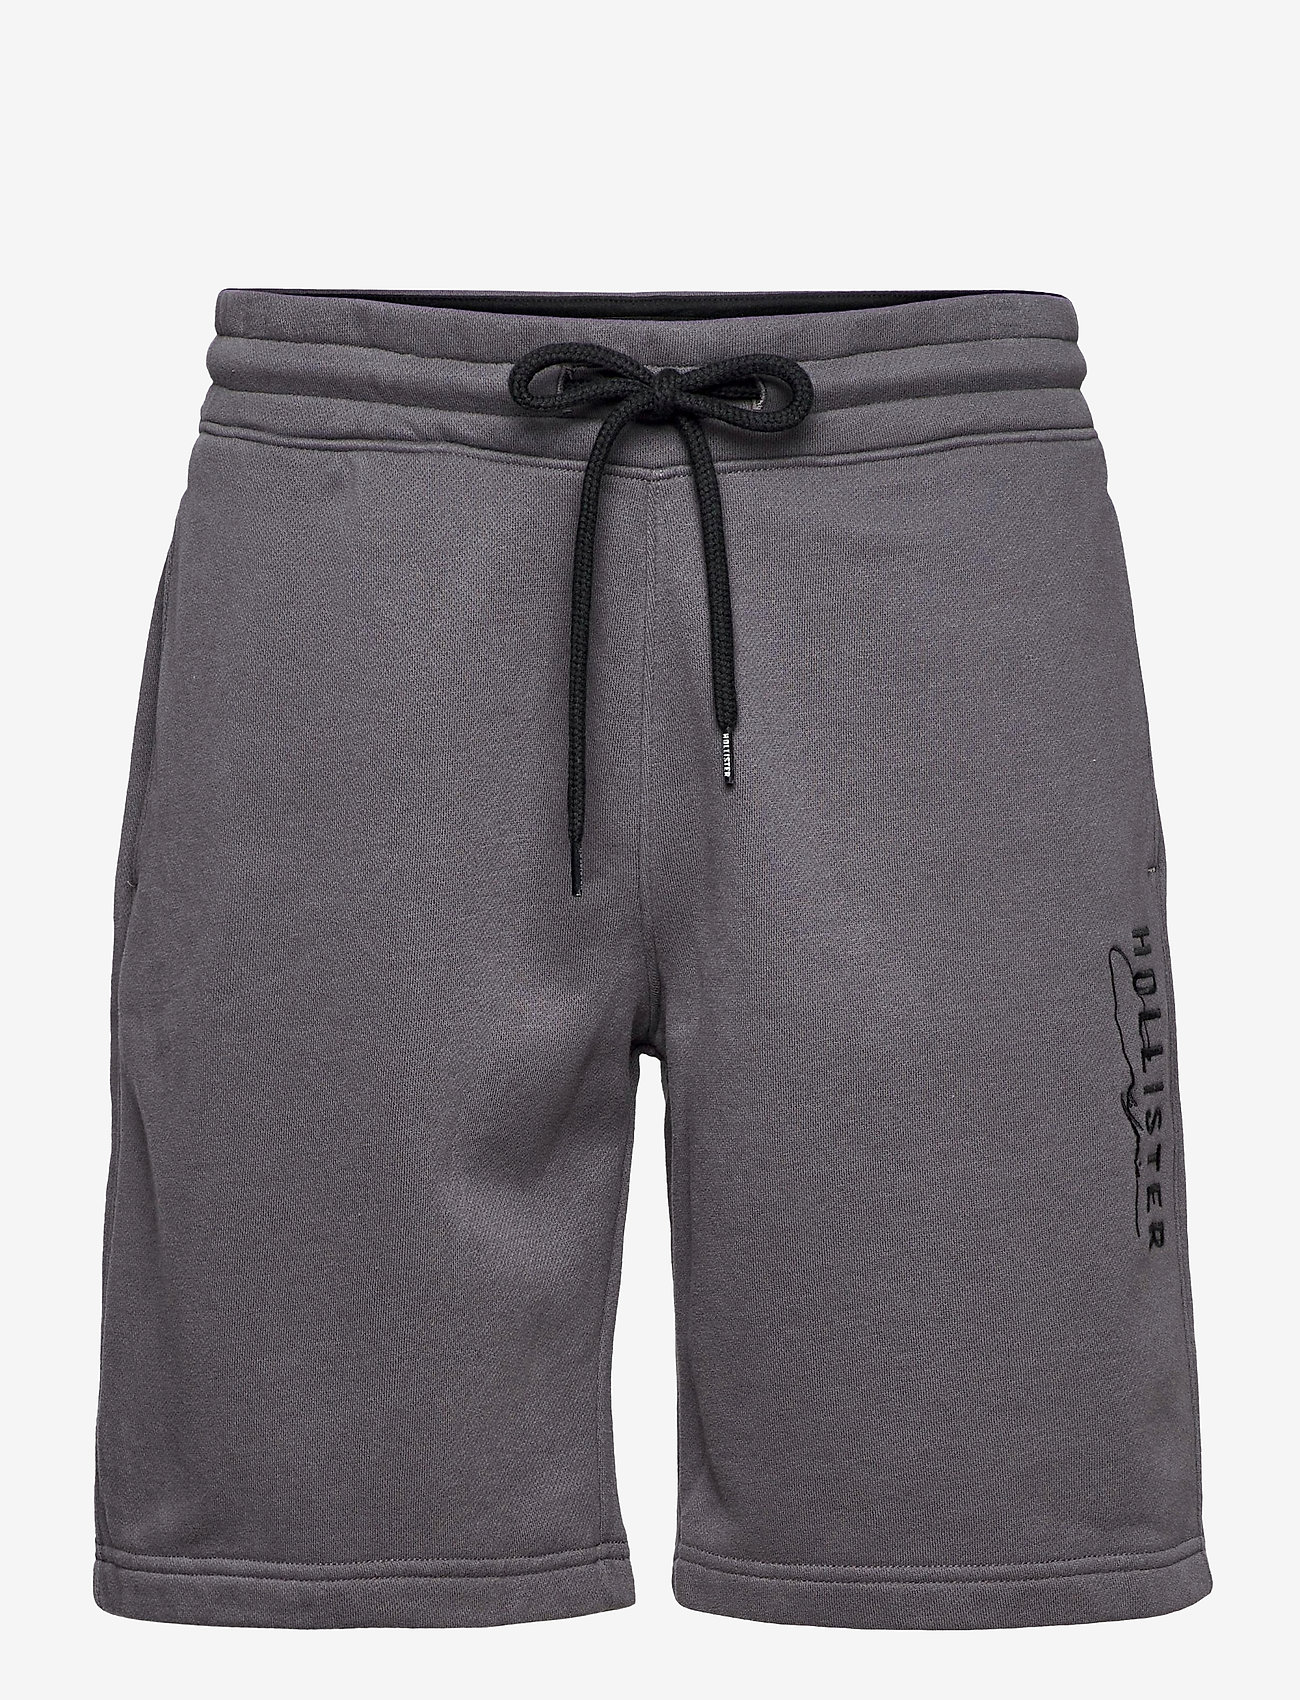 grey hollister shorts